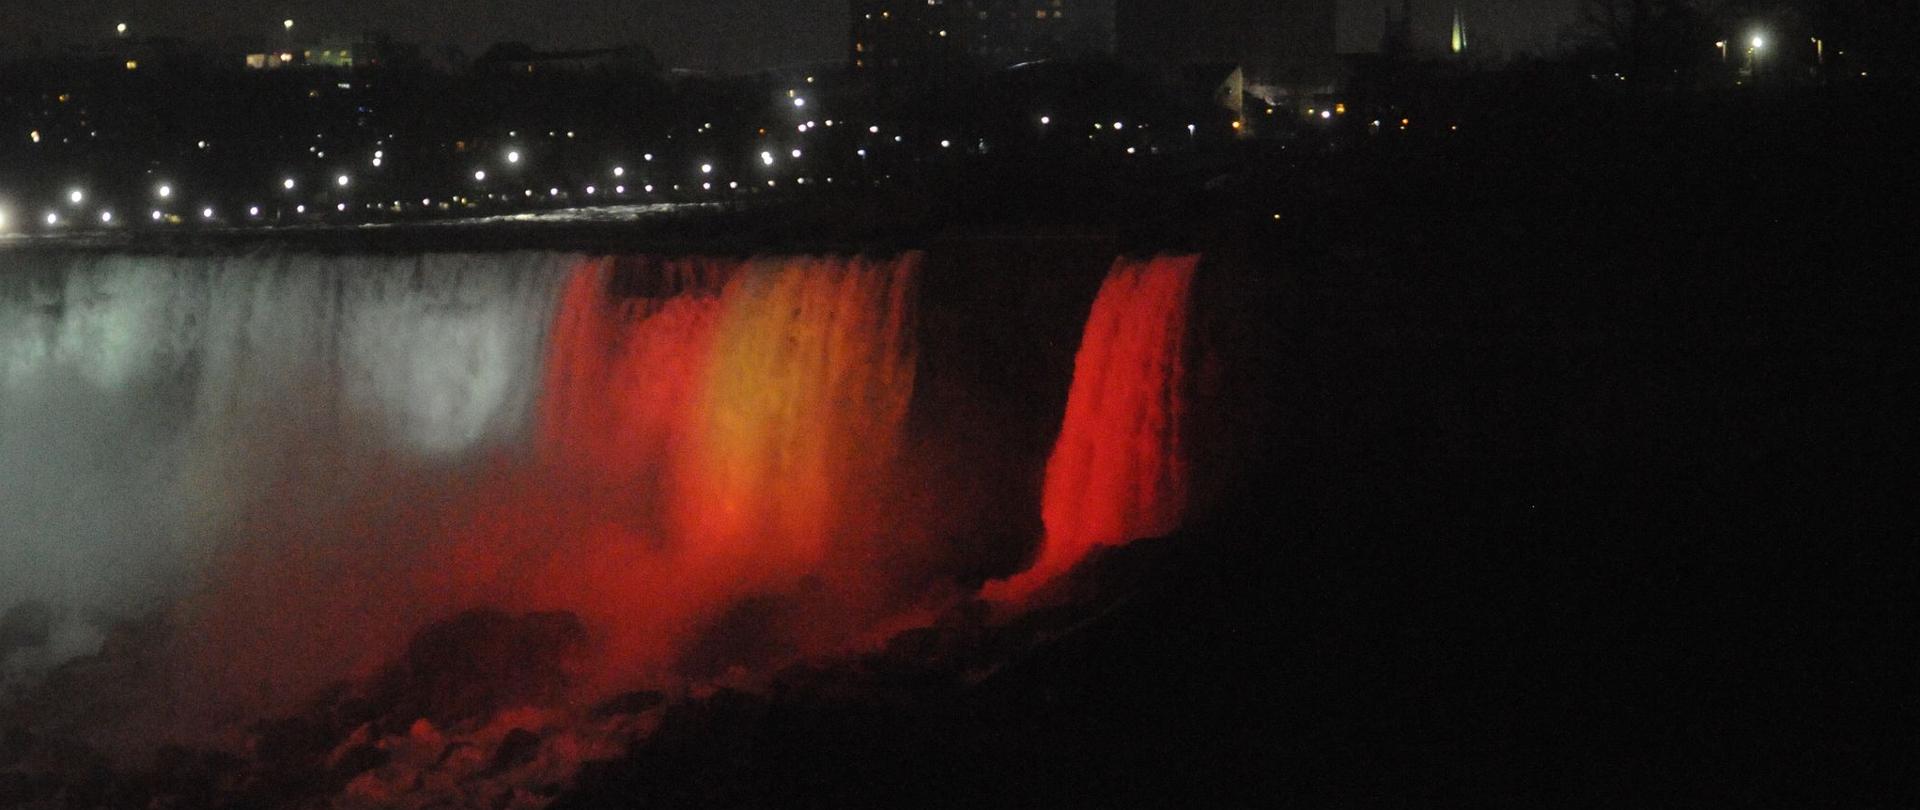 Polish national colours light up Niagara Falls